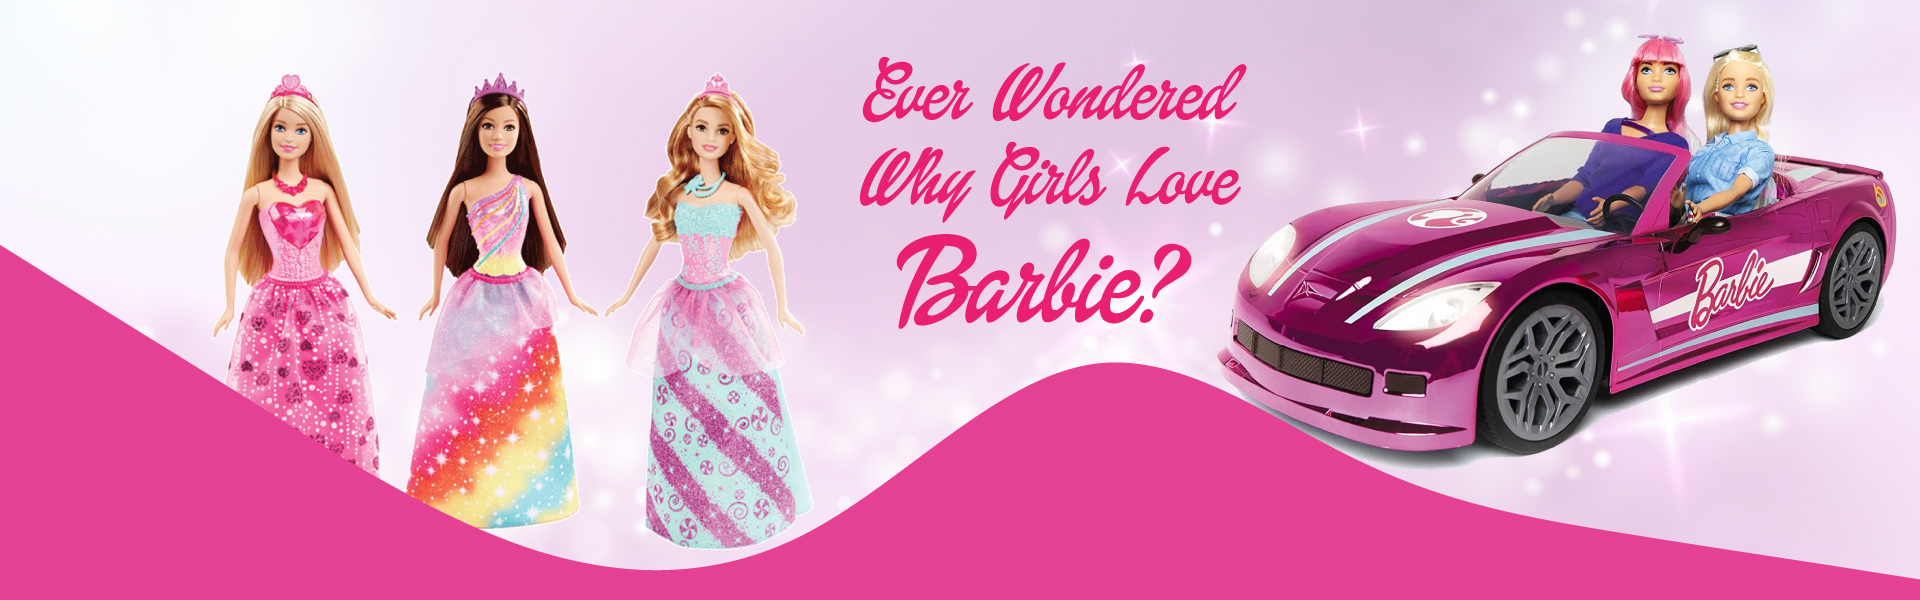 why girls love barbie dolls